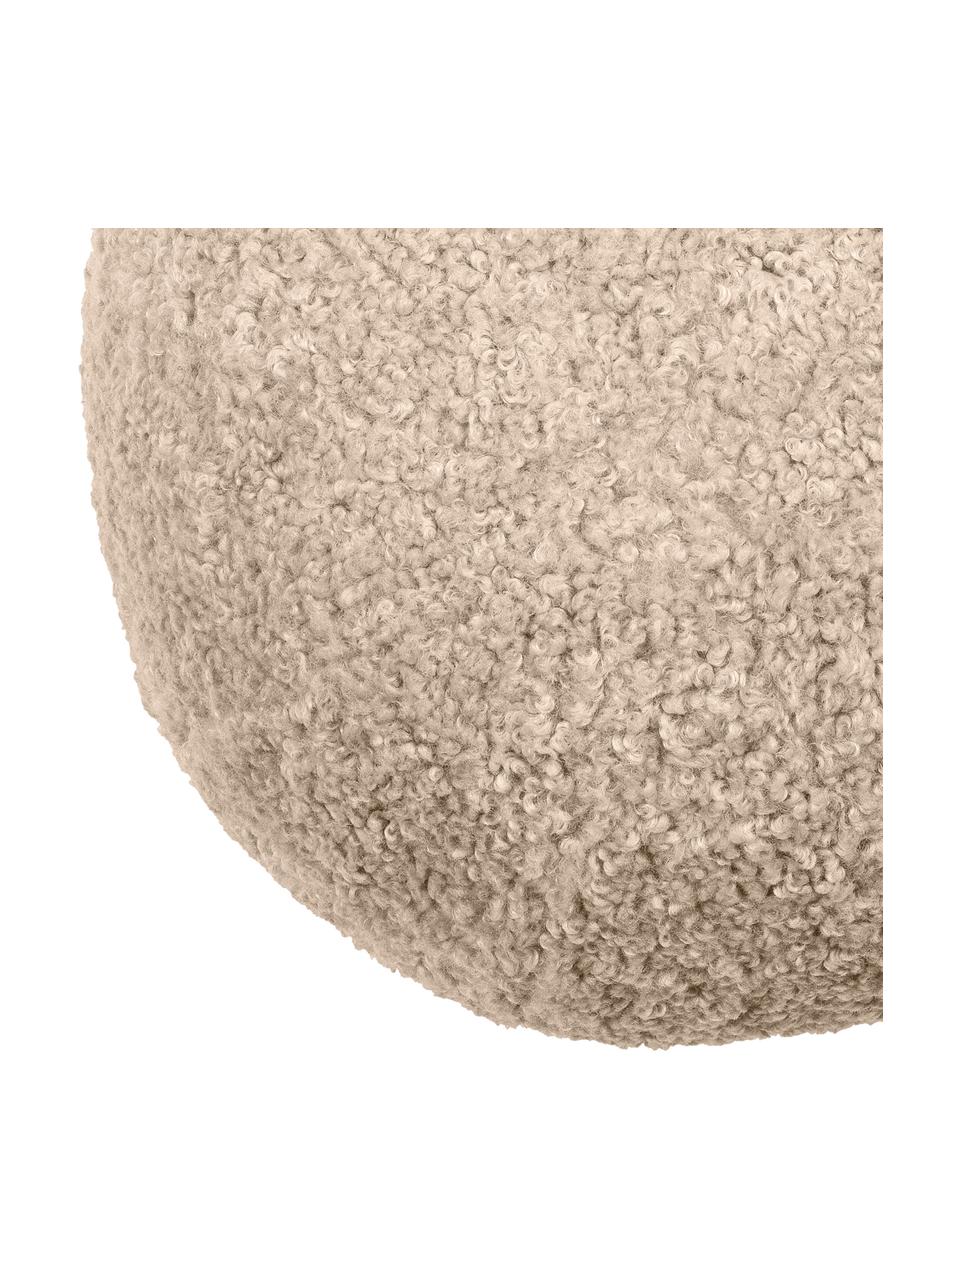 Cojín esférico artesanal en tejido bouclé Palla, con relleno, Tapizado: 100% poliéster, tejido bo, Arena, Ø 30 cm